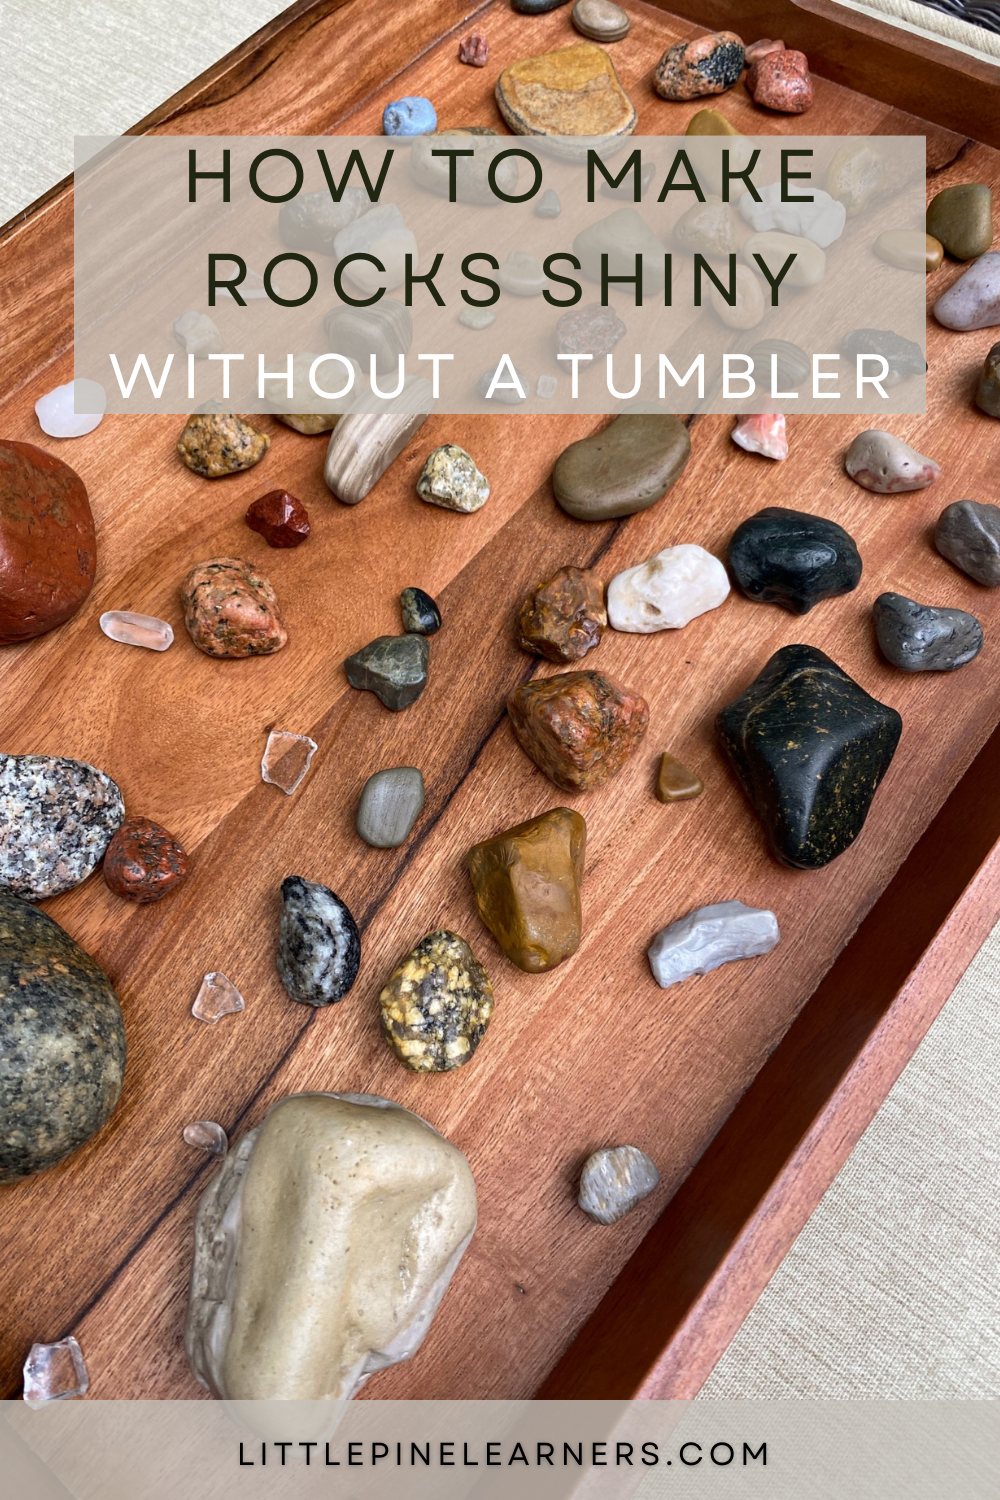 Shiny rocks with oil!